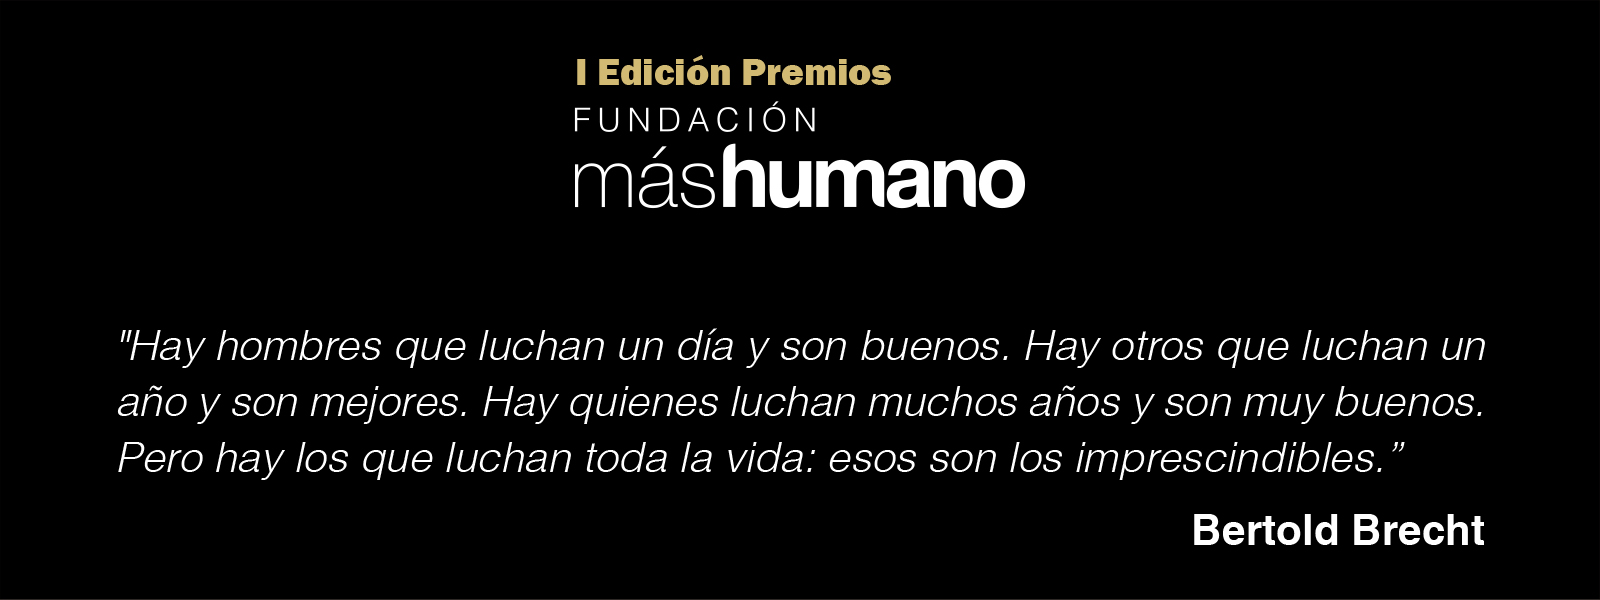 Premios Fundacion mashumano footer